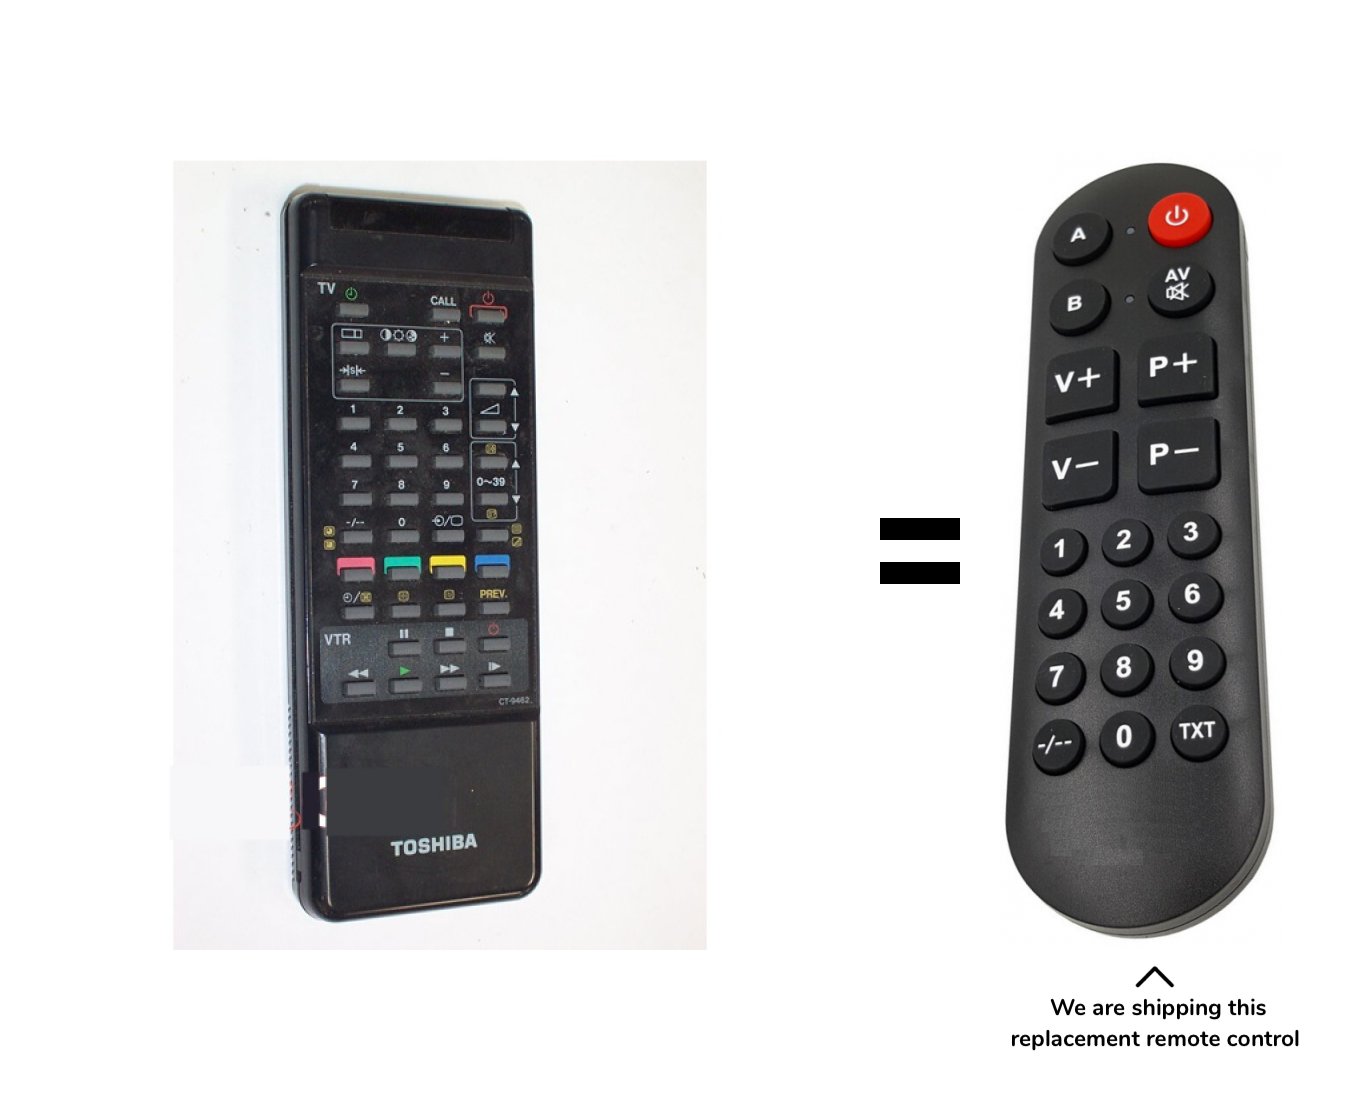 Toshiba 2102RT remote control for seniors